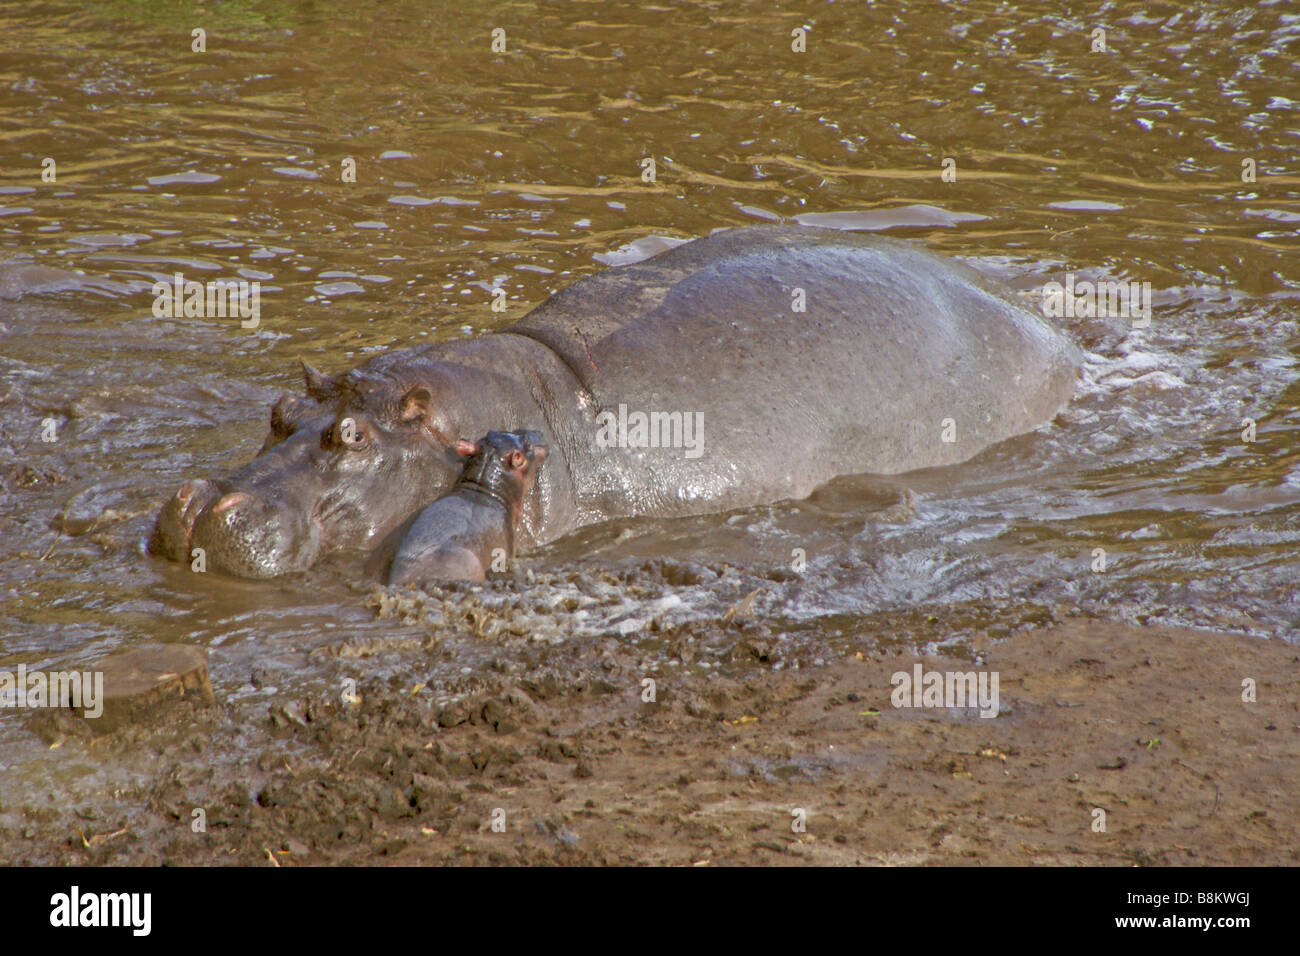 Female hippopotamus with newborn in river, Masai Mara, Kenya Stock Photo